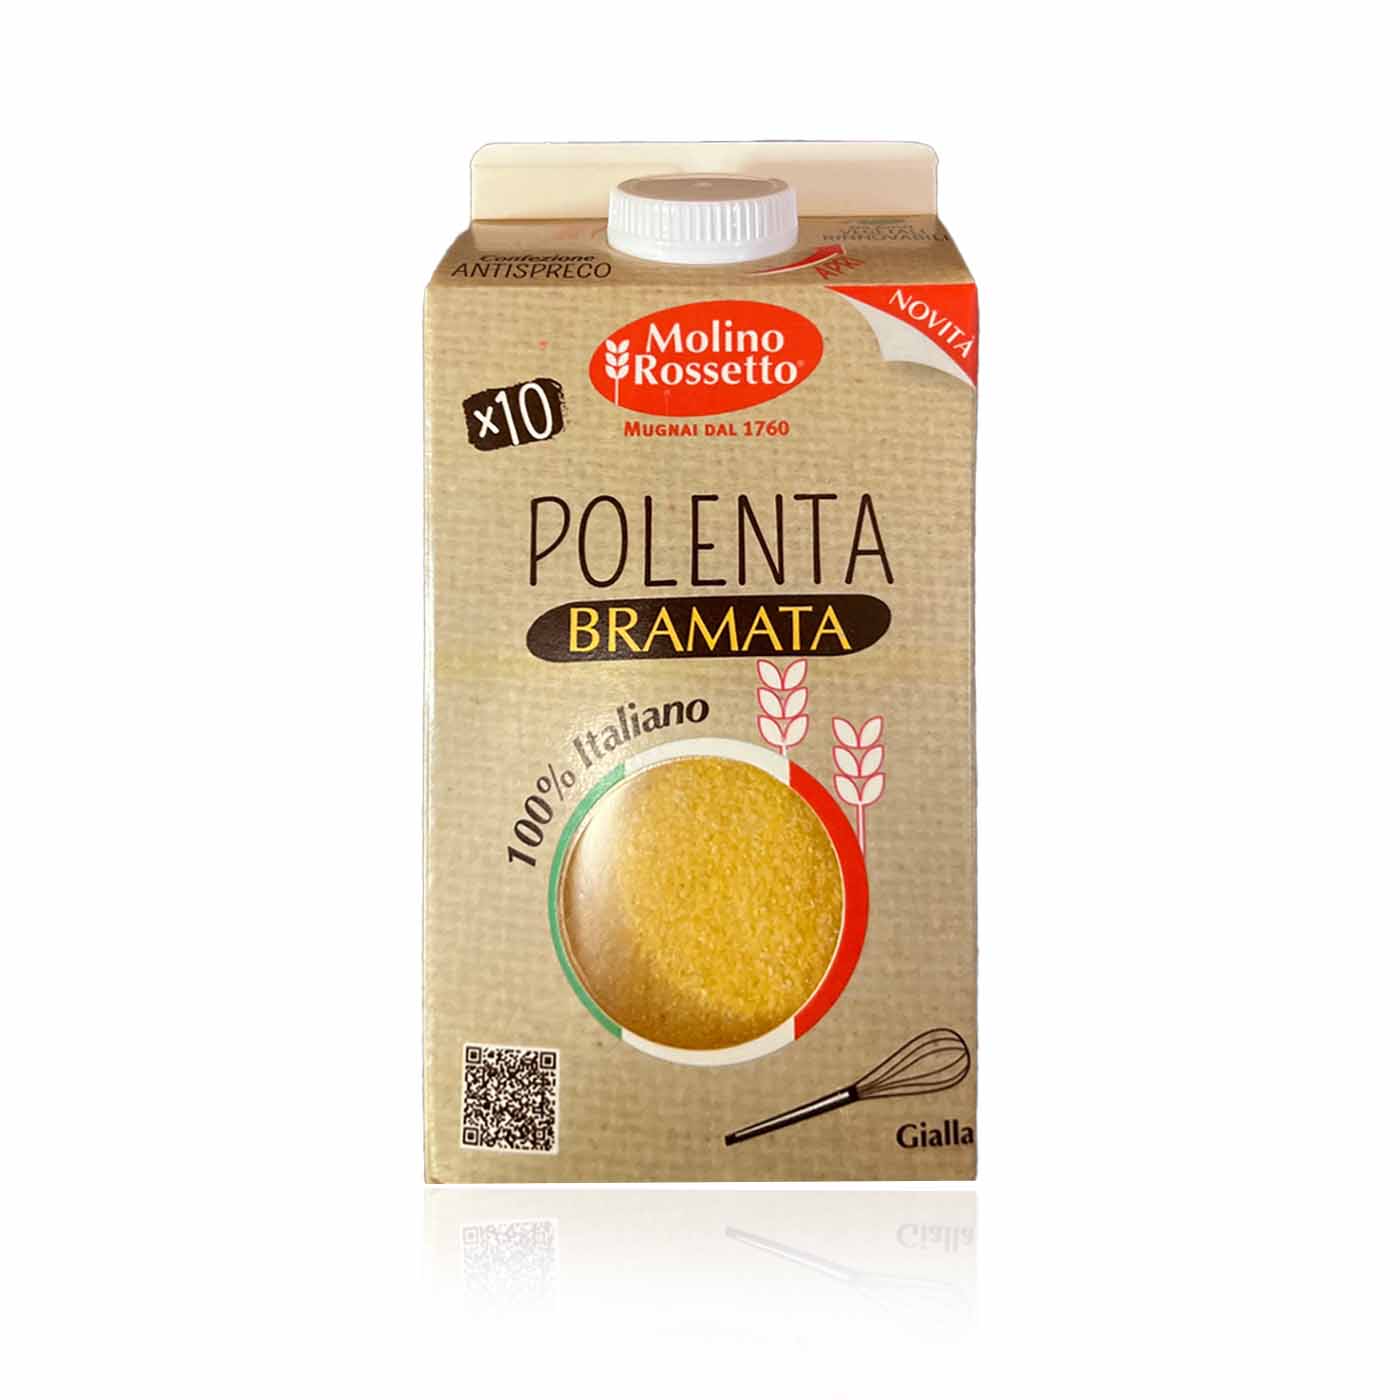 MOLINO ROSSETTO Polenta bramata- Polenta grob - 0,75kg